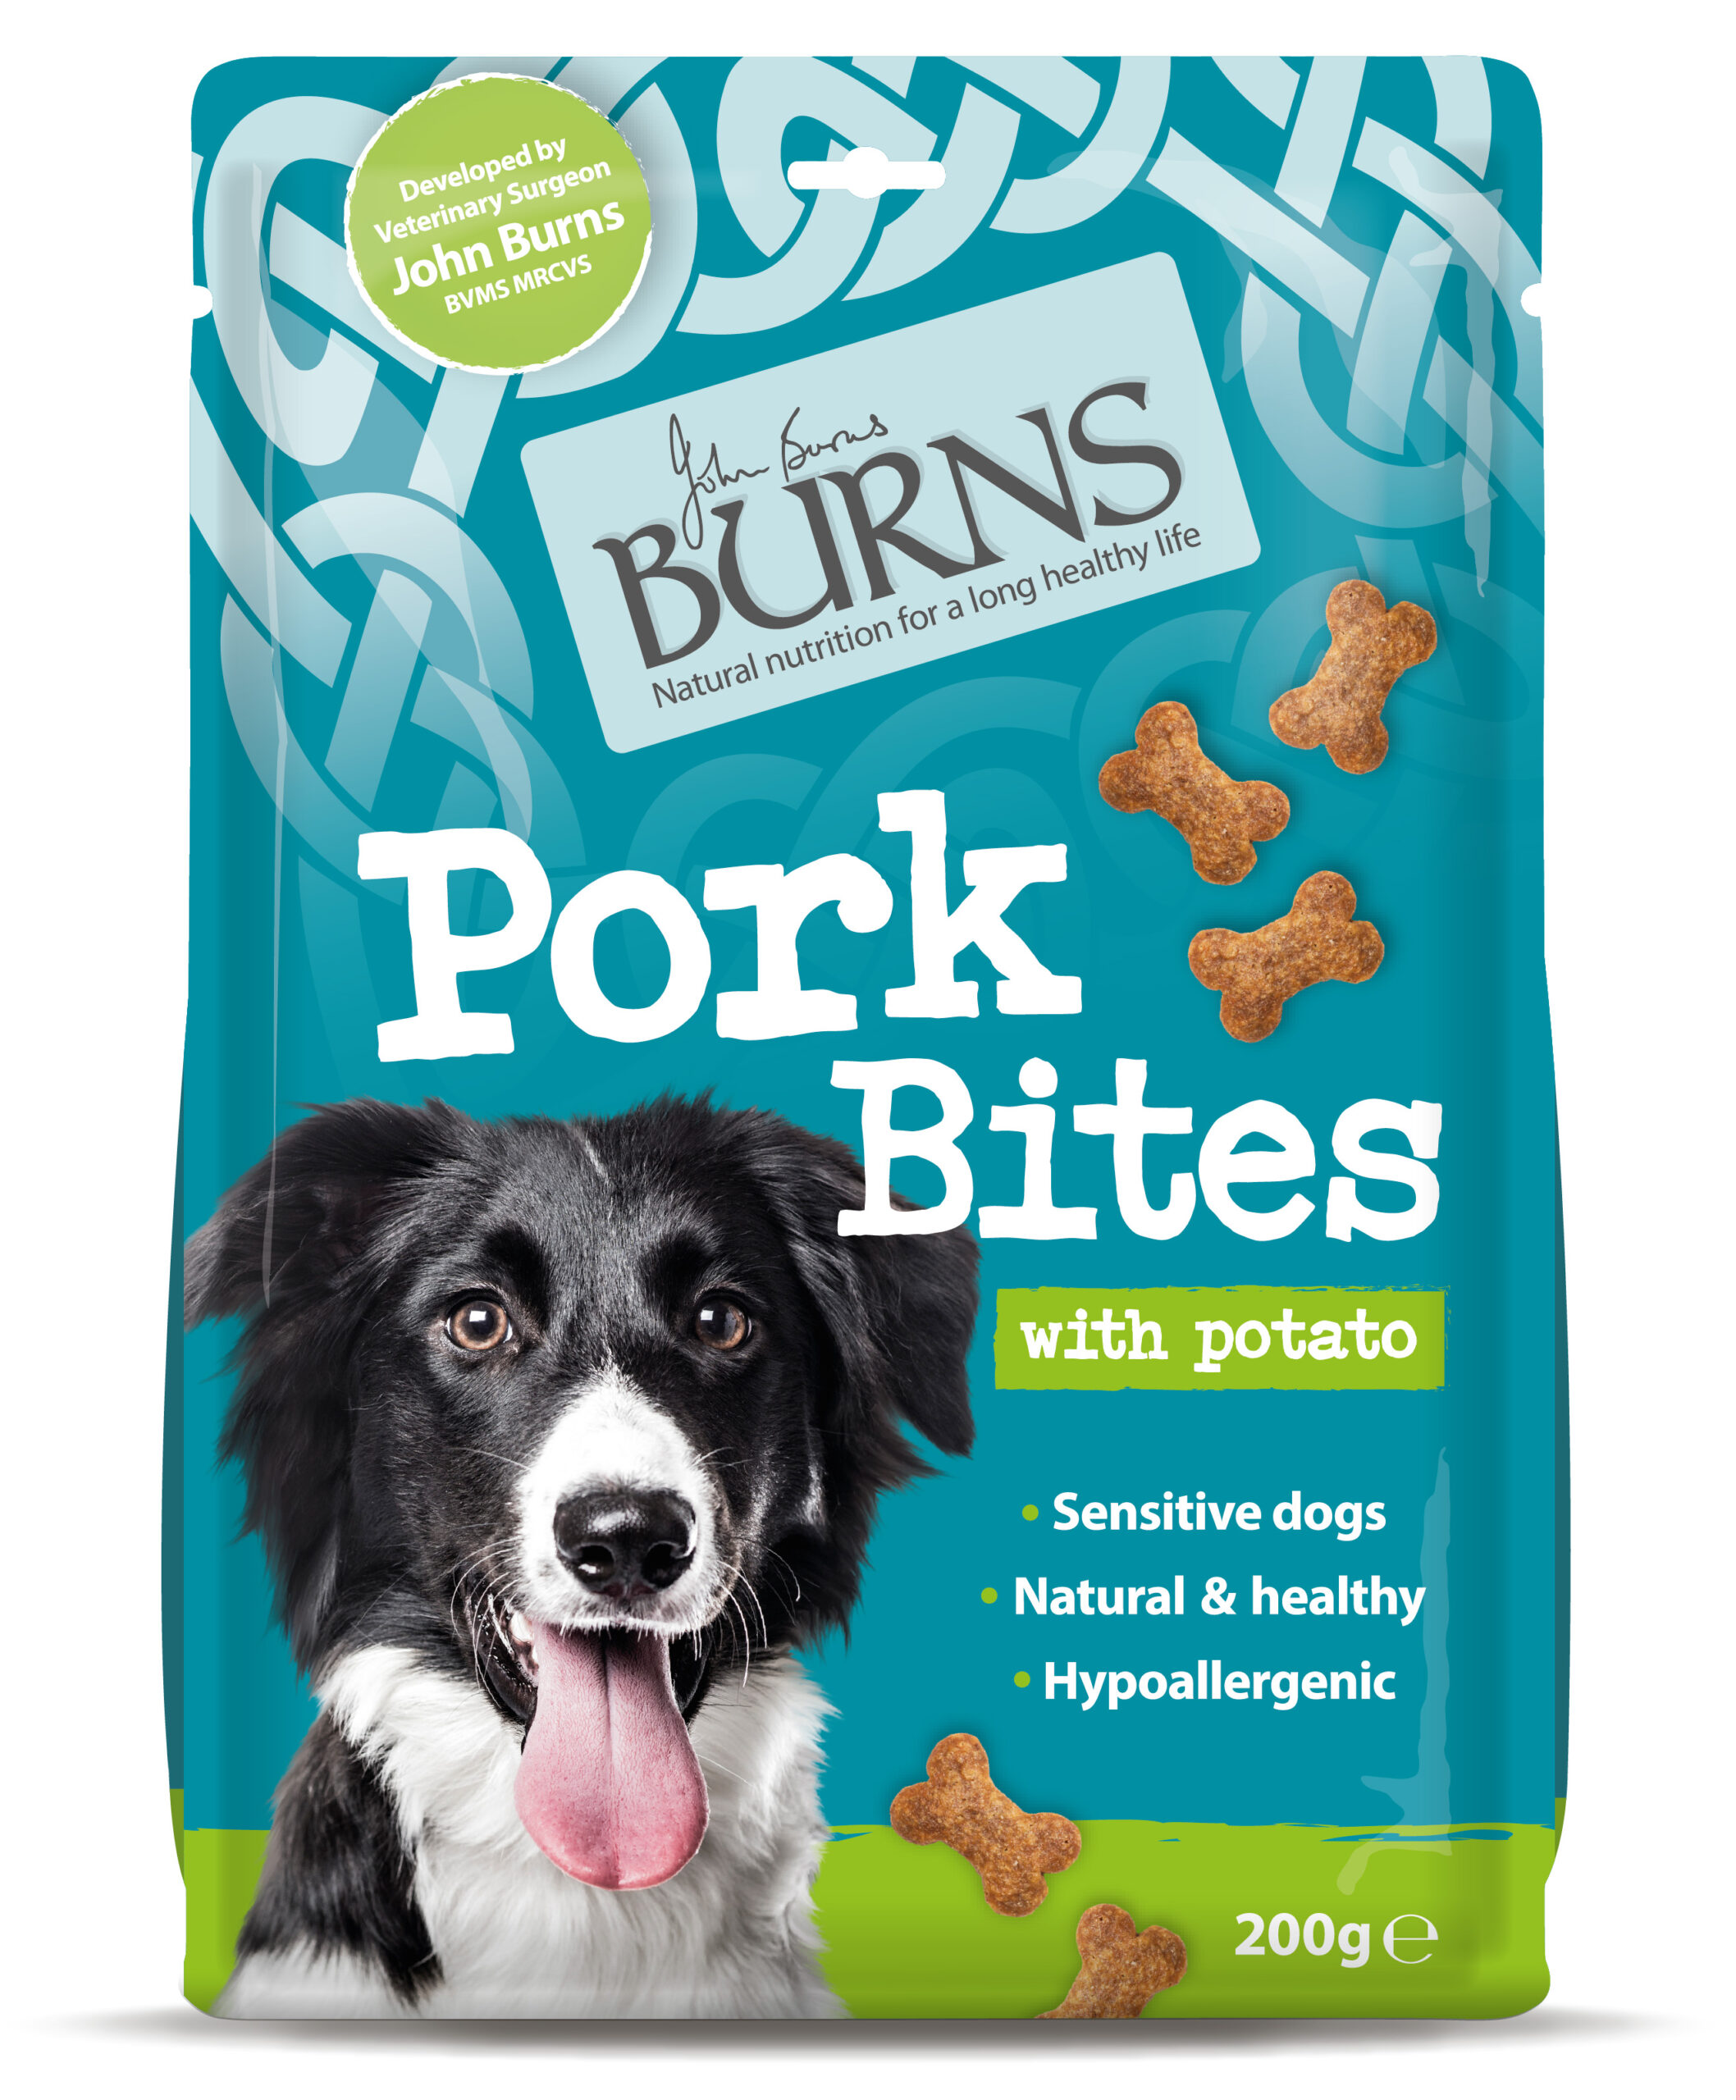 Suppliers of Pork Bites With Potato UK